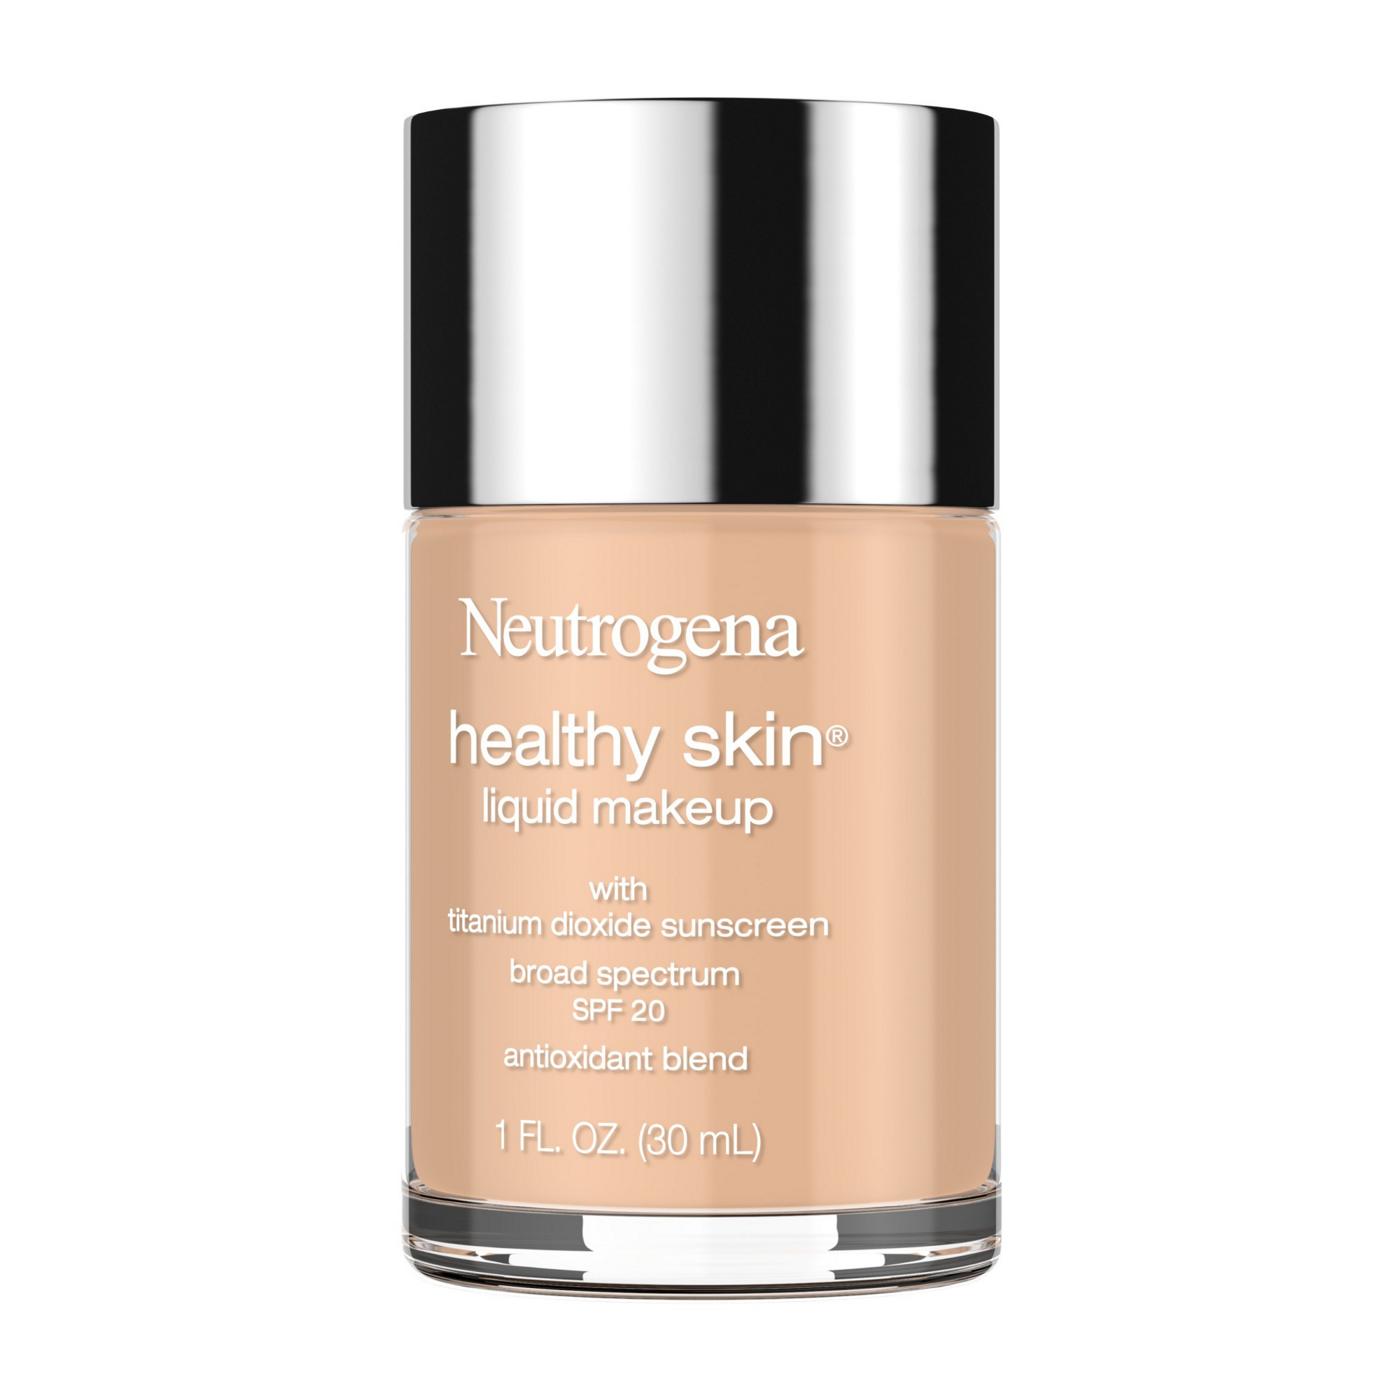 Neutrogena Healthy Skin Liquid Makeup 105 Caramel; image 6 of 6